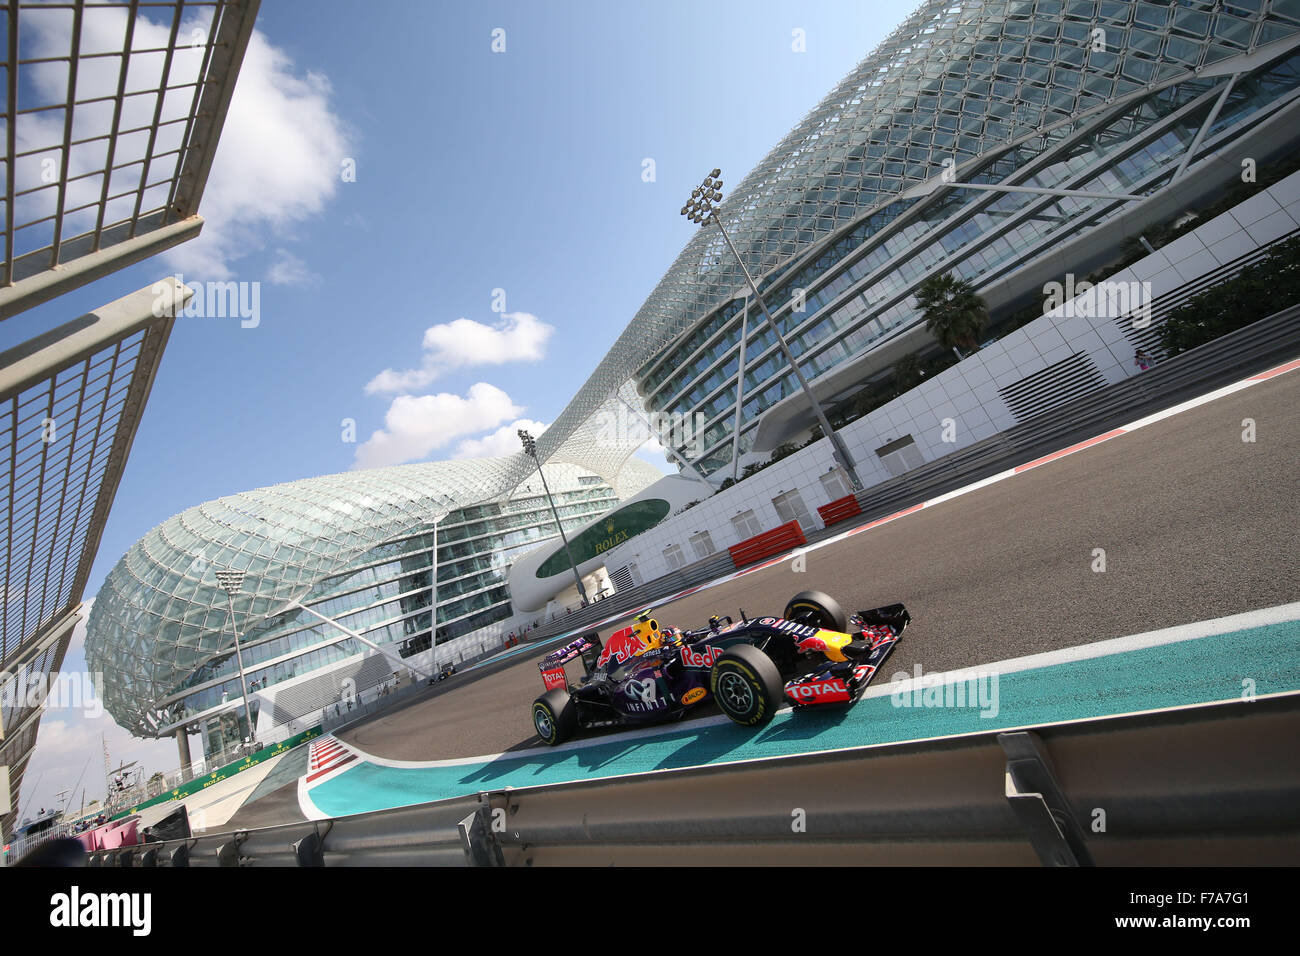 Abu Dhabi. 27. November 2015. Motorsport: FIA Formula One World Championship 2015, Grand Prix von Abu Dhabi, #26 Daniil Kvyat (RUS, Infiniti Red Bull Racing), Credit: Dpa picture-Alliance/Alamy Live News Stockfoto